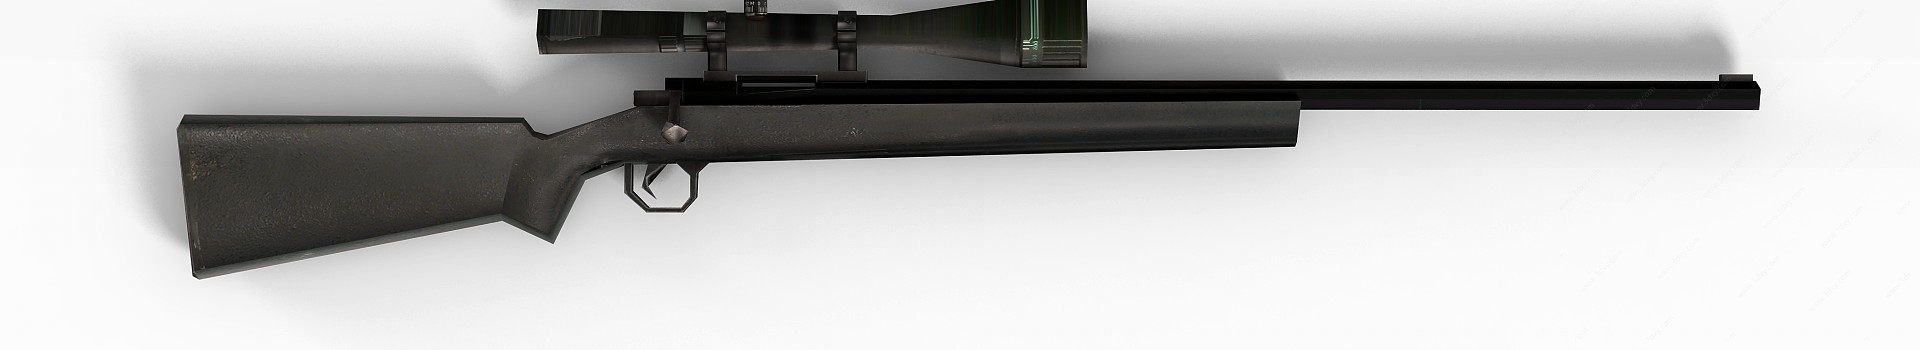 COD5武器狙击枪3D模型